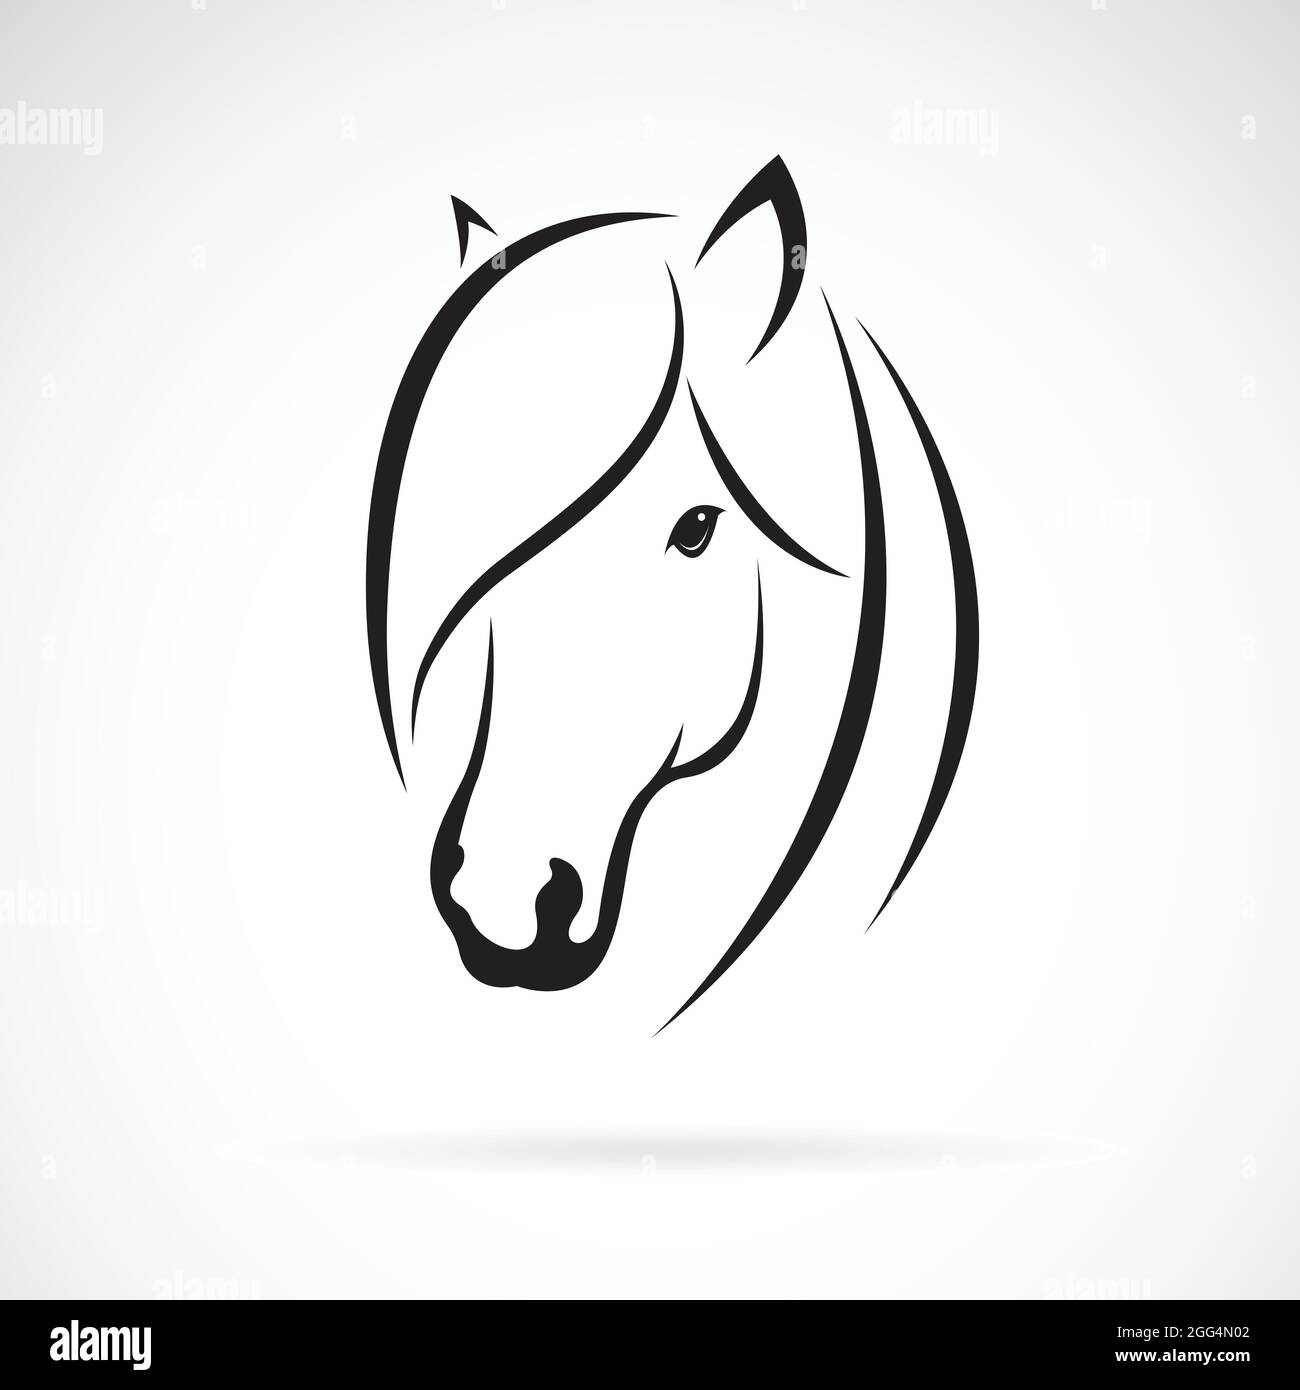 arabian horse drawing easy - Clip Art Library